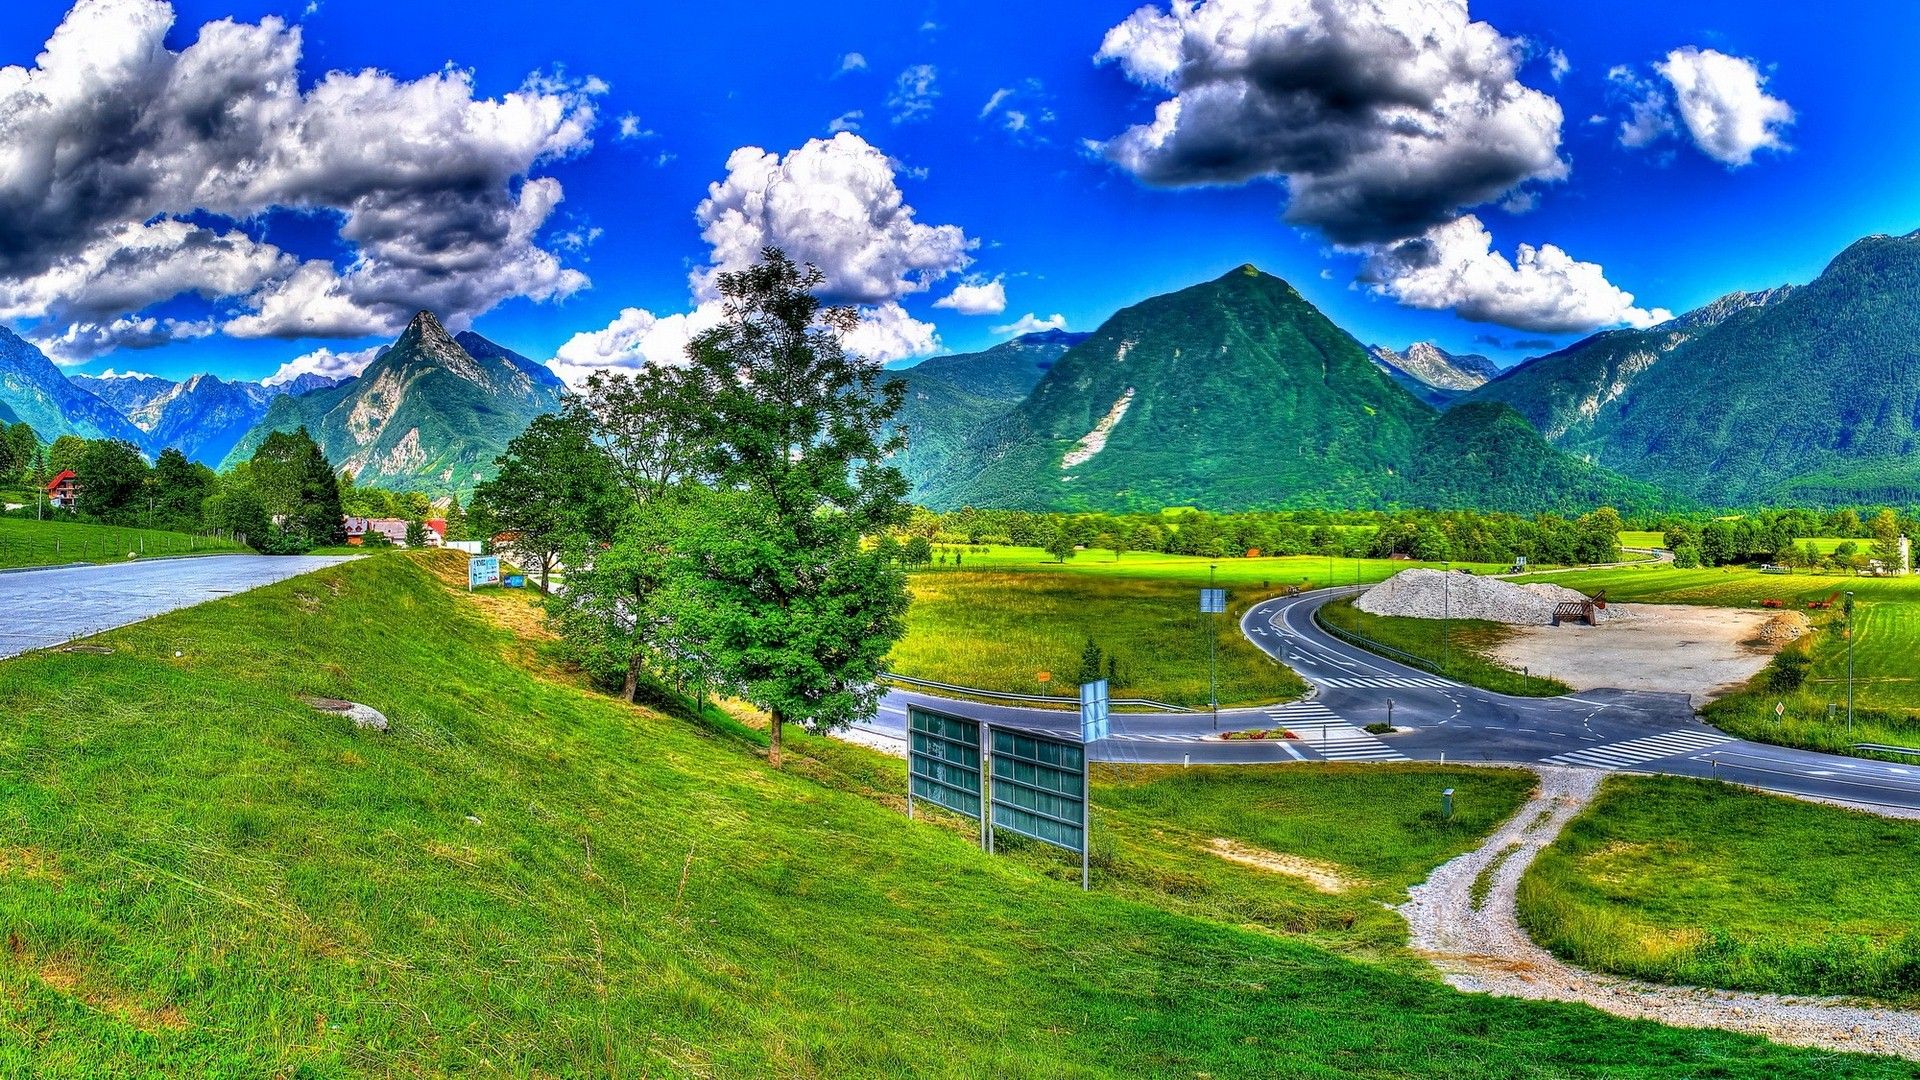 hd wallpaper for laptop full screen,natural landscape,nature,sky,mountainous landforms,mountain